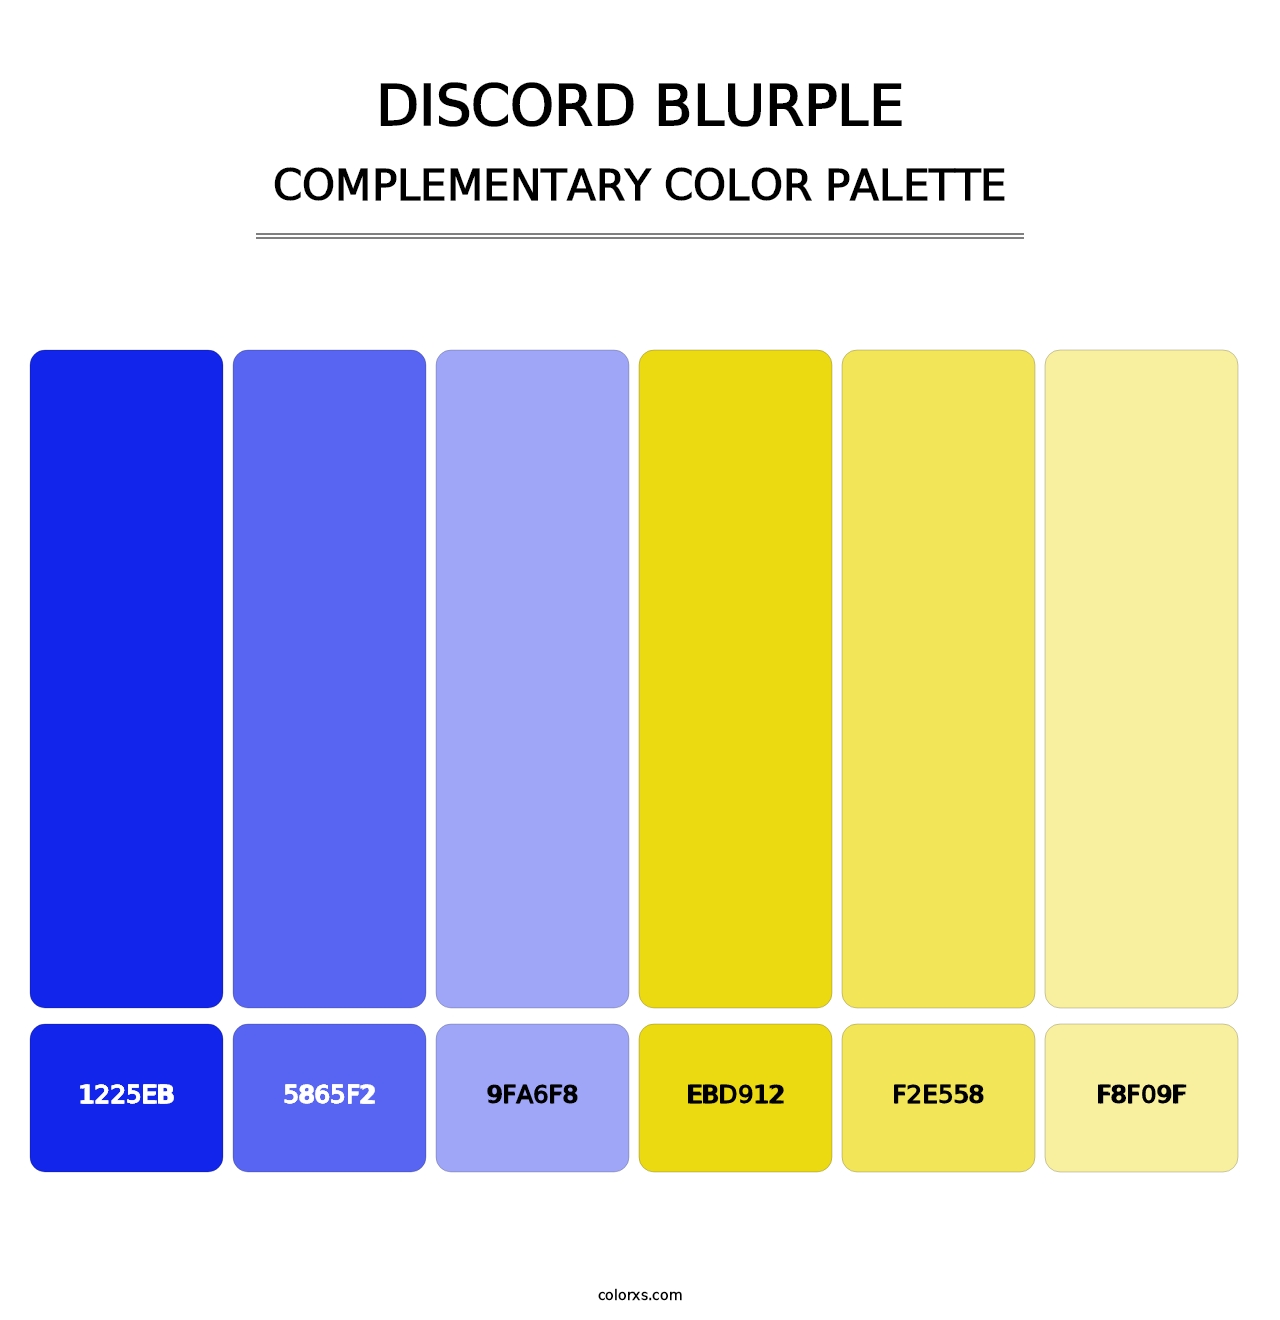 Discord Blurple - Complementary Color Palette